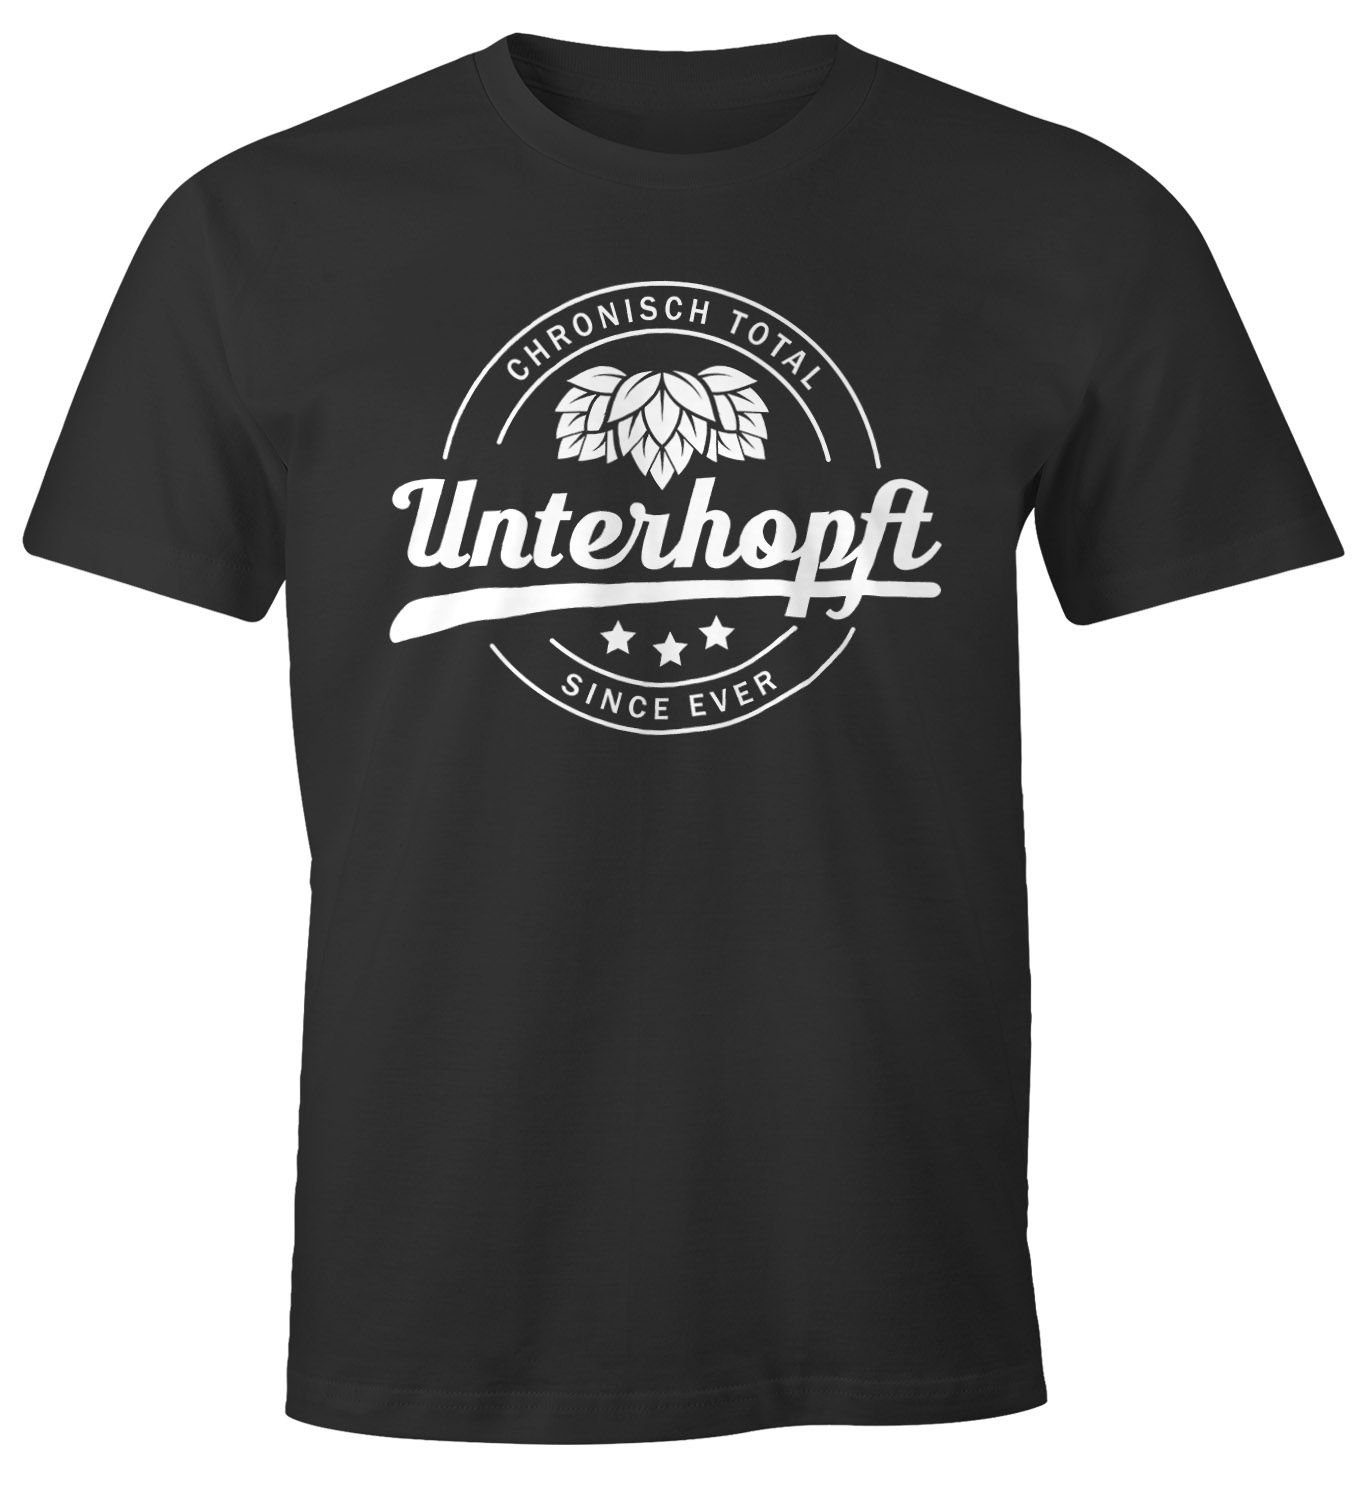 MoonWorks Print-Shirt Chronisch Unterhopft Total Herren T-Shirt Since Ever Fun-Shirt Moonworks® mit Print schwarz